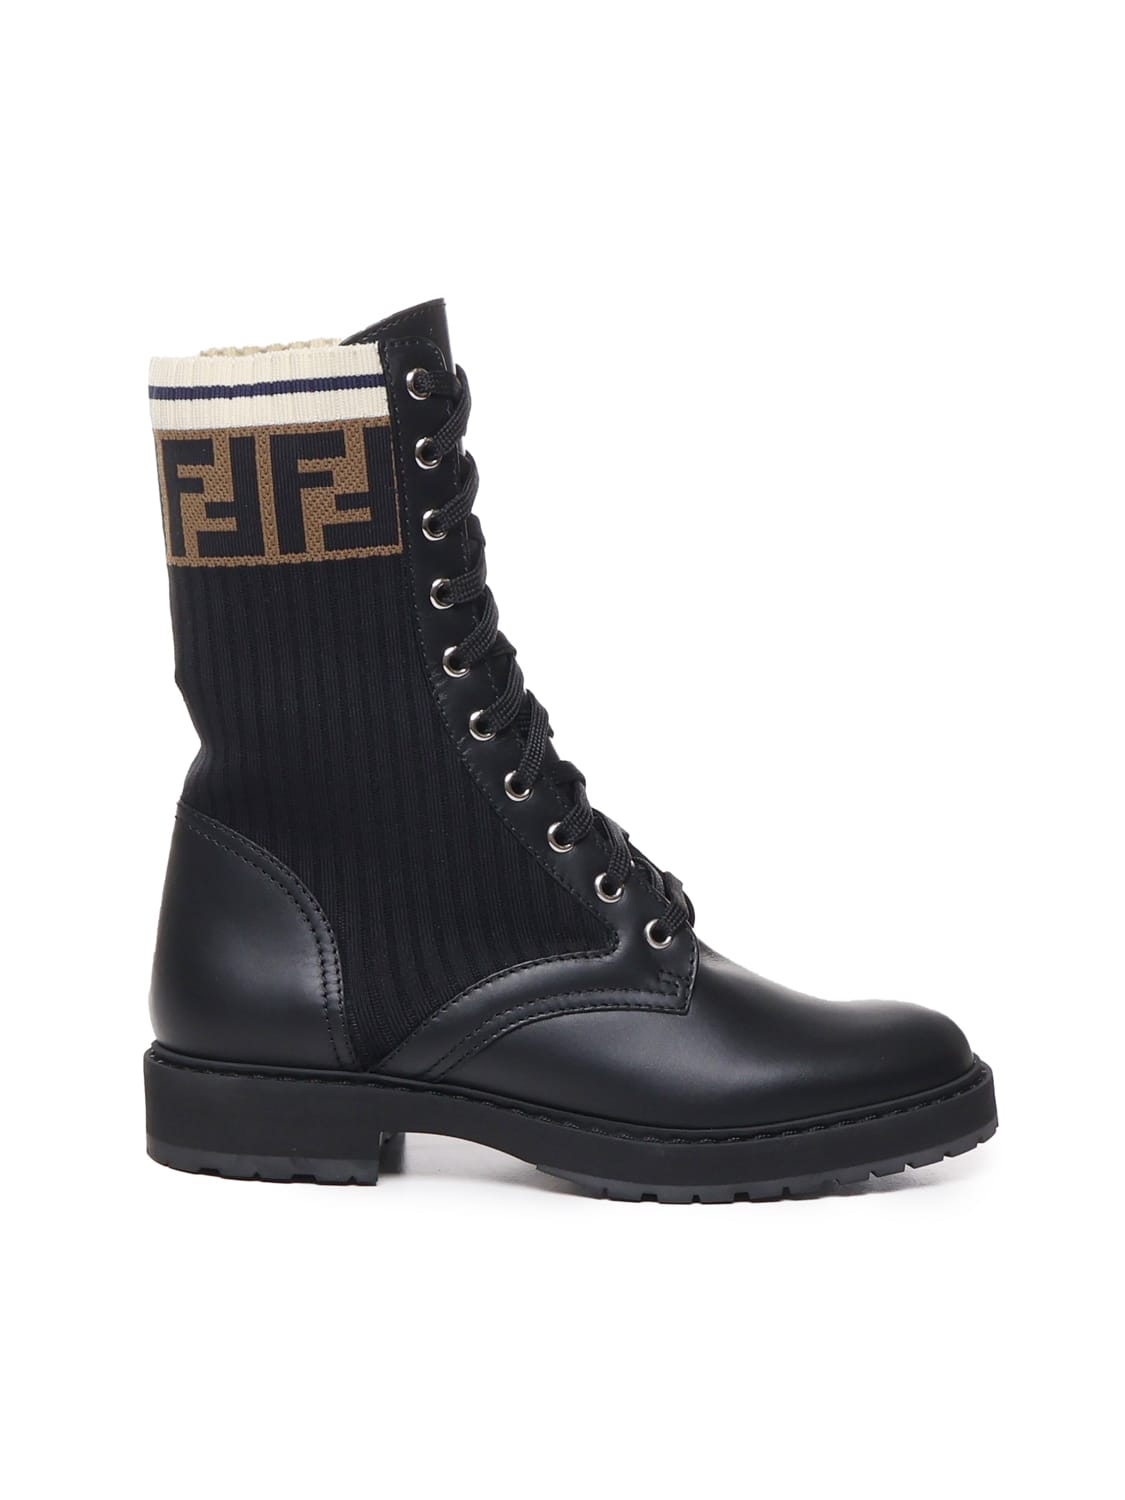 Fendi Leather And Mesh Biker Boots With Ff Monogram In Nero/tab.nero Marino